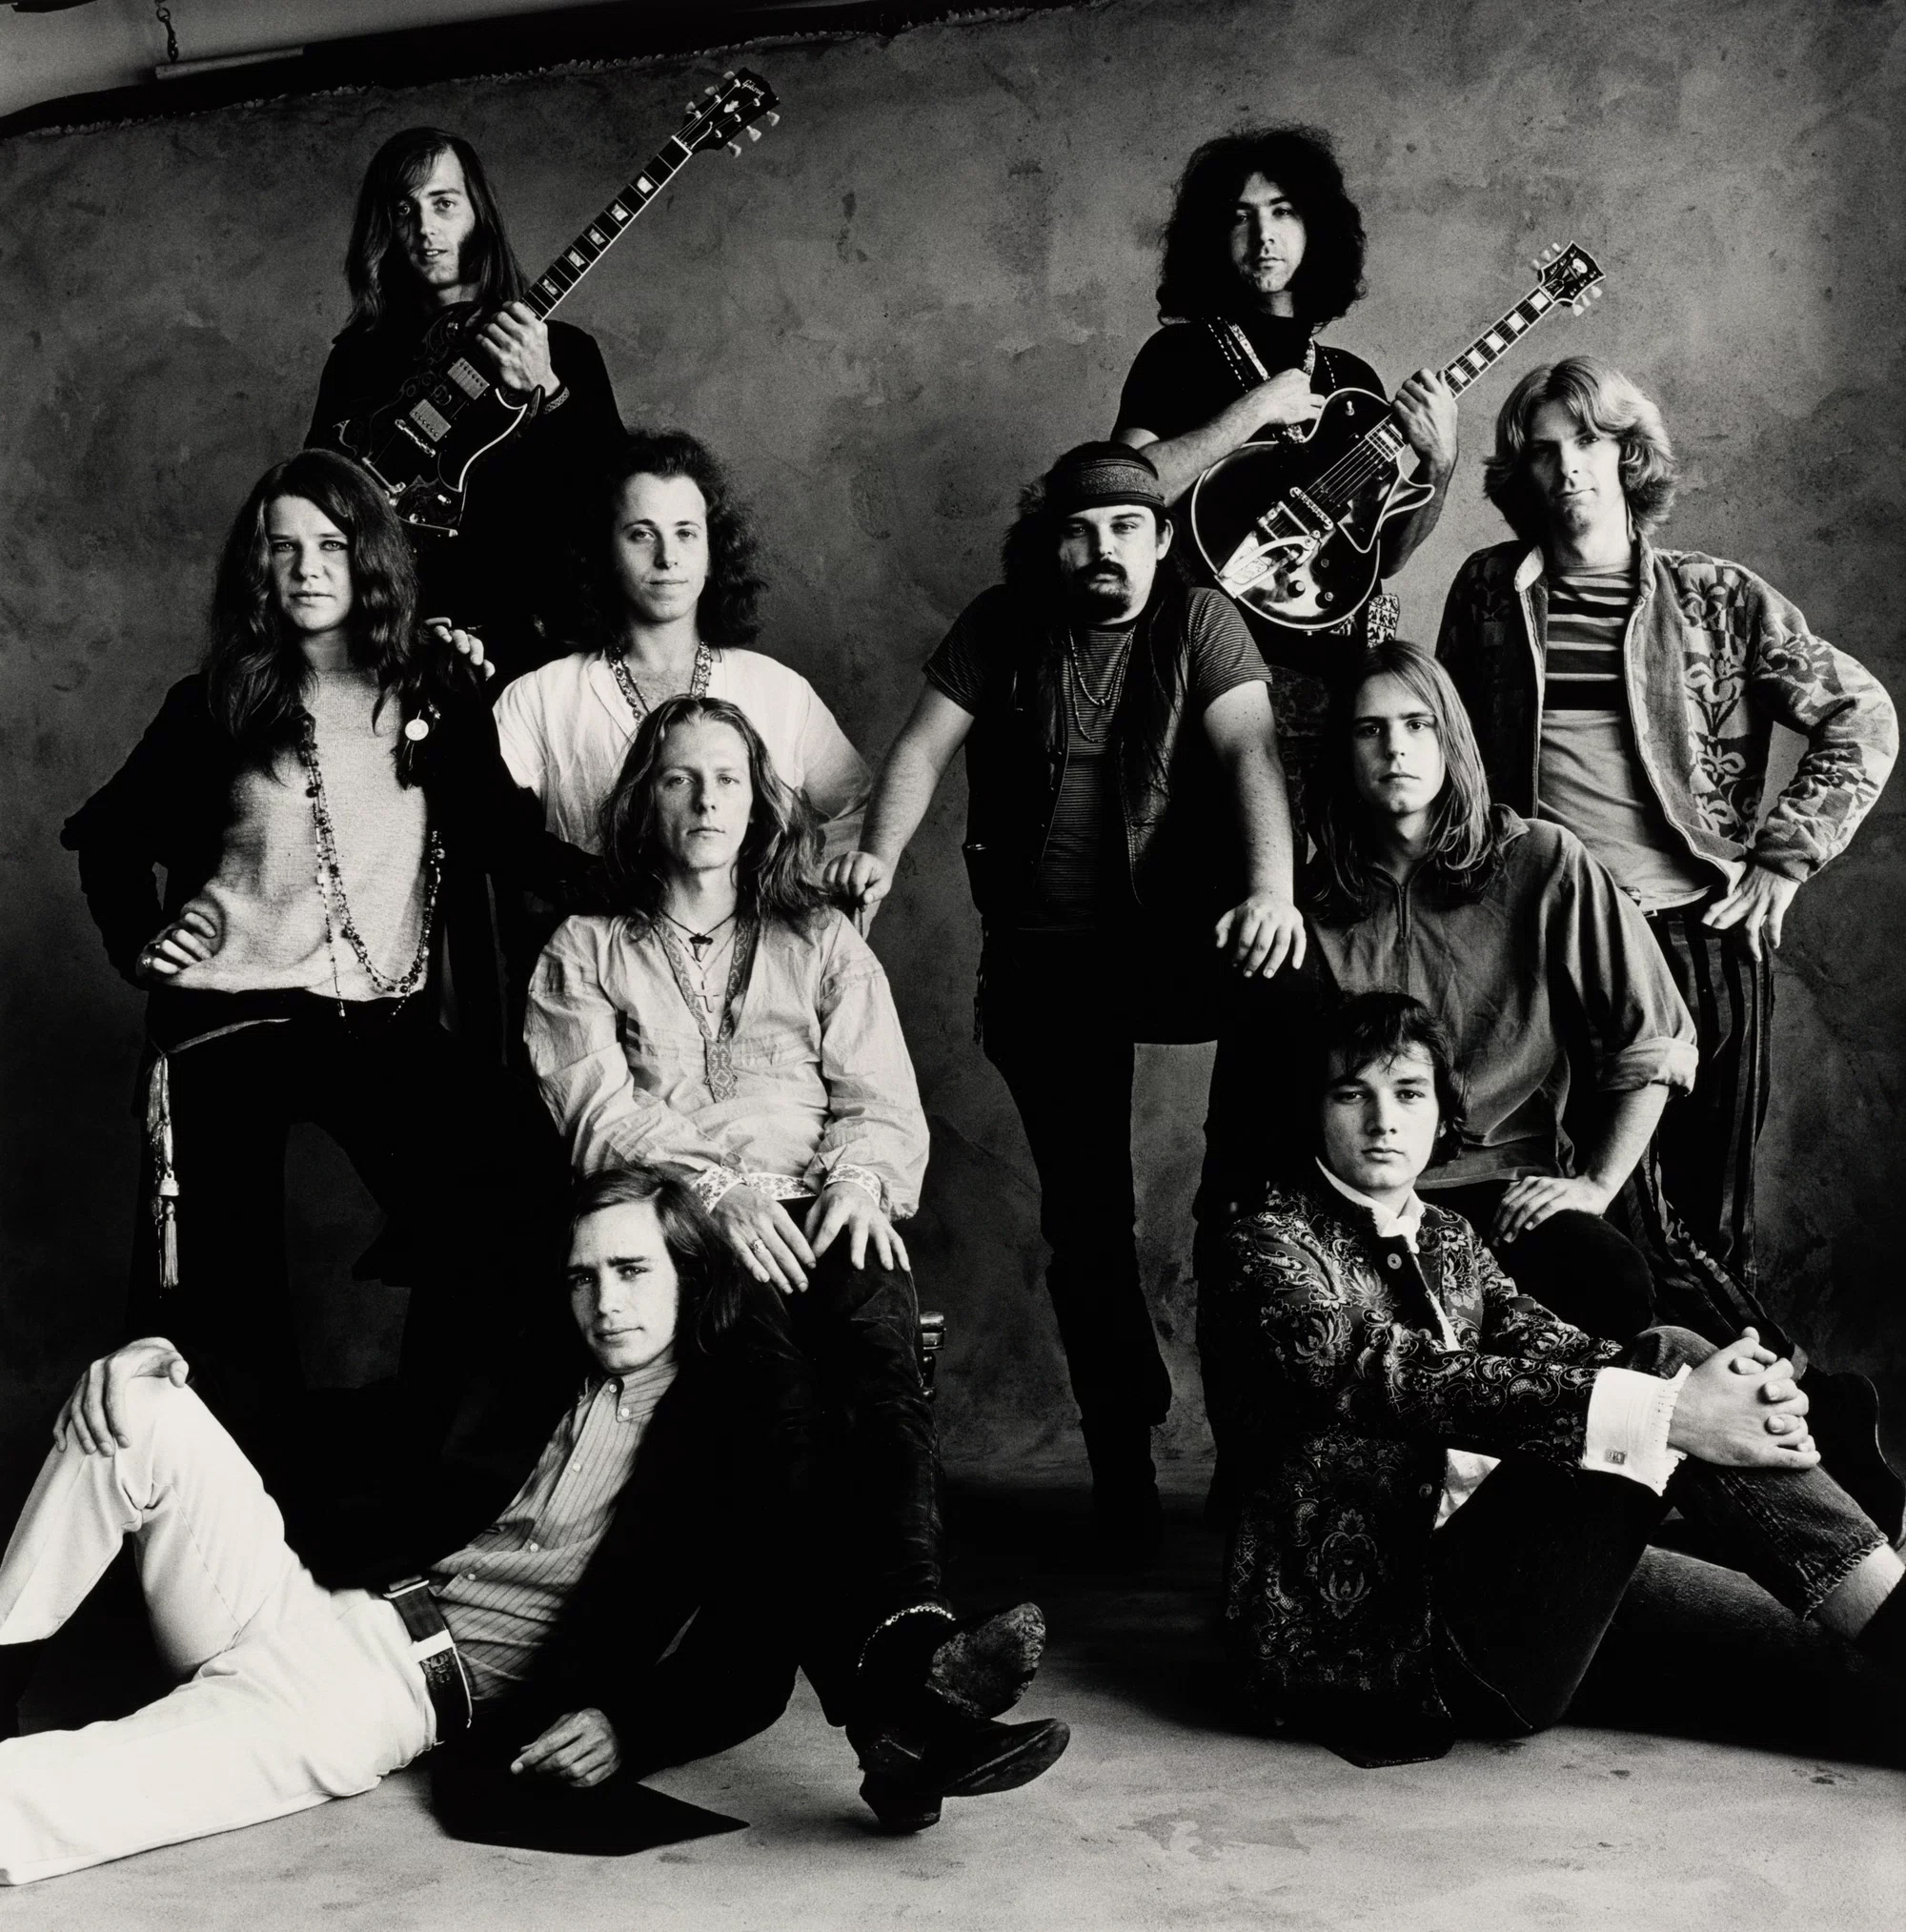 Irving Penn, Rock Groups, San Francisco, 1967